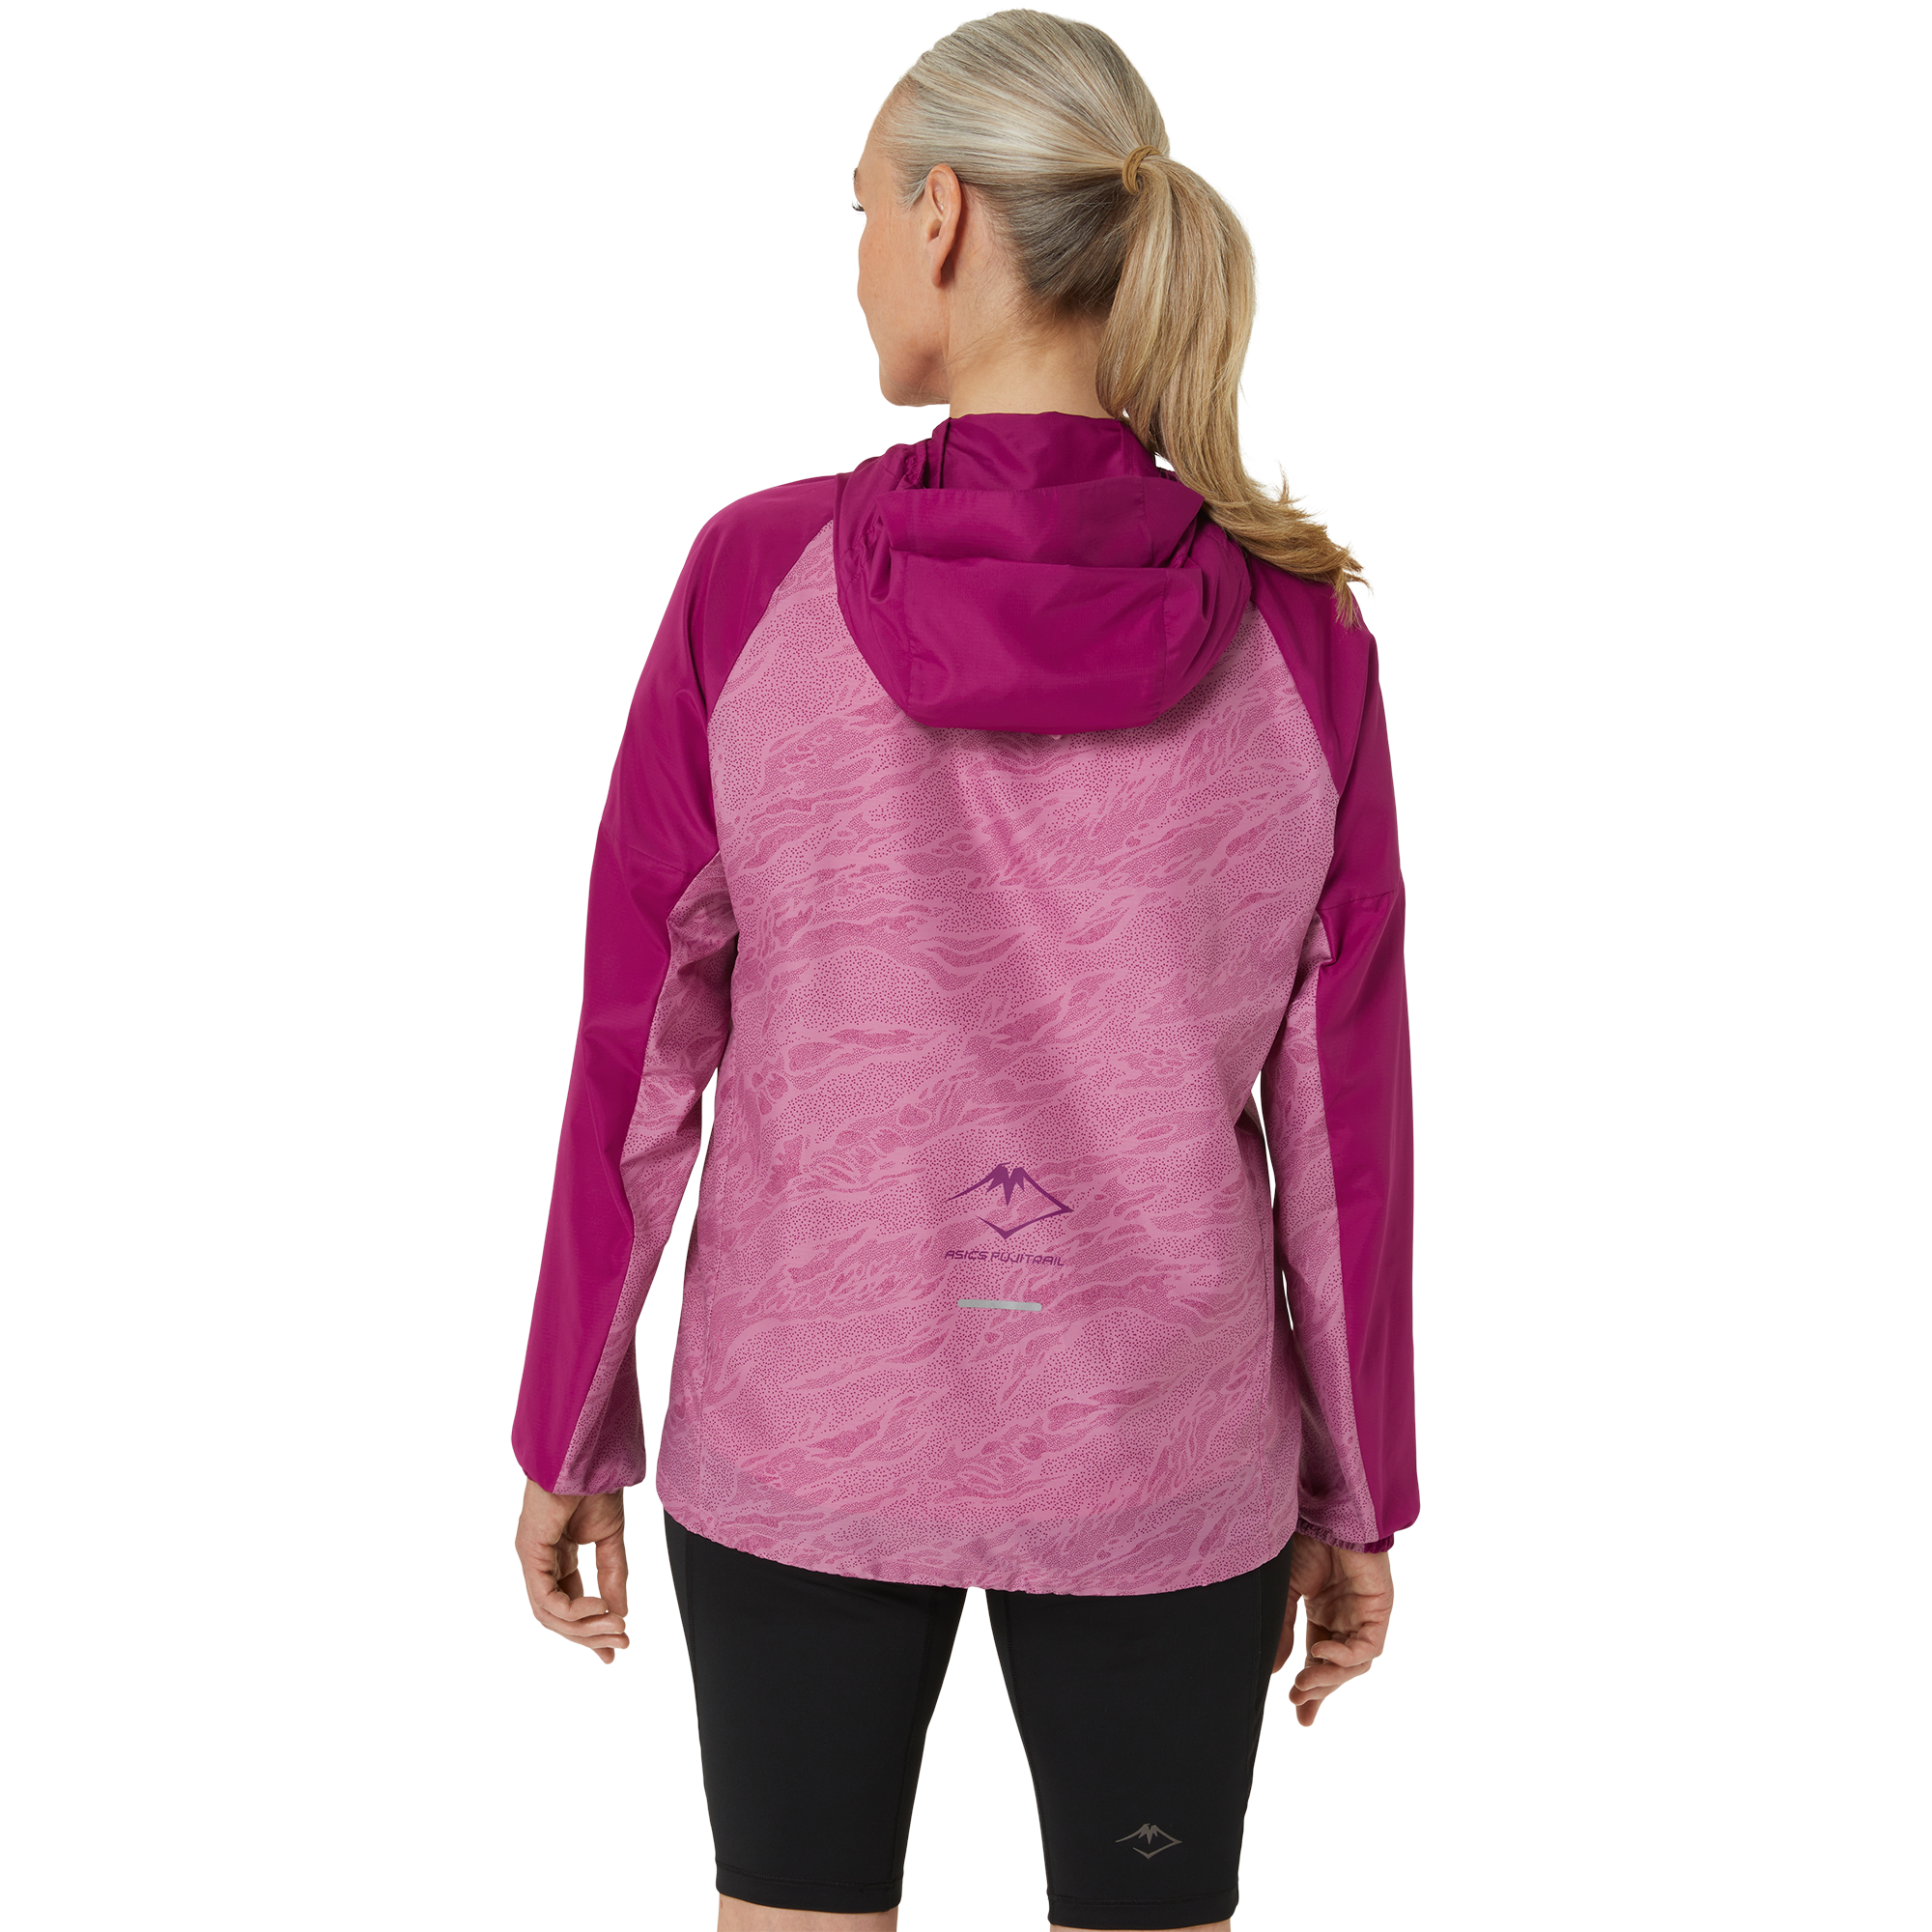 ASICS - Fujitrail Packable Running Bittl berry soft Women Shop Jacket at Sport